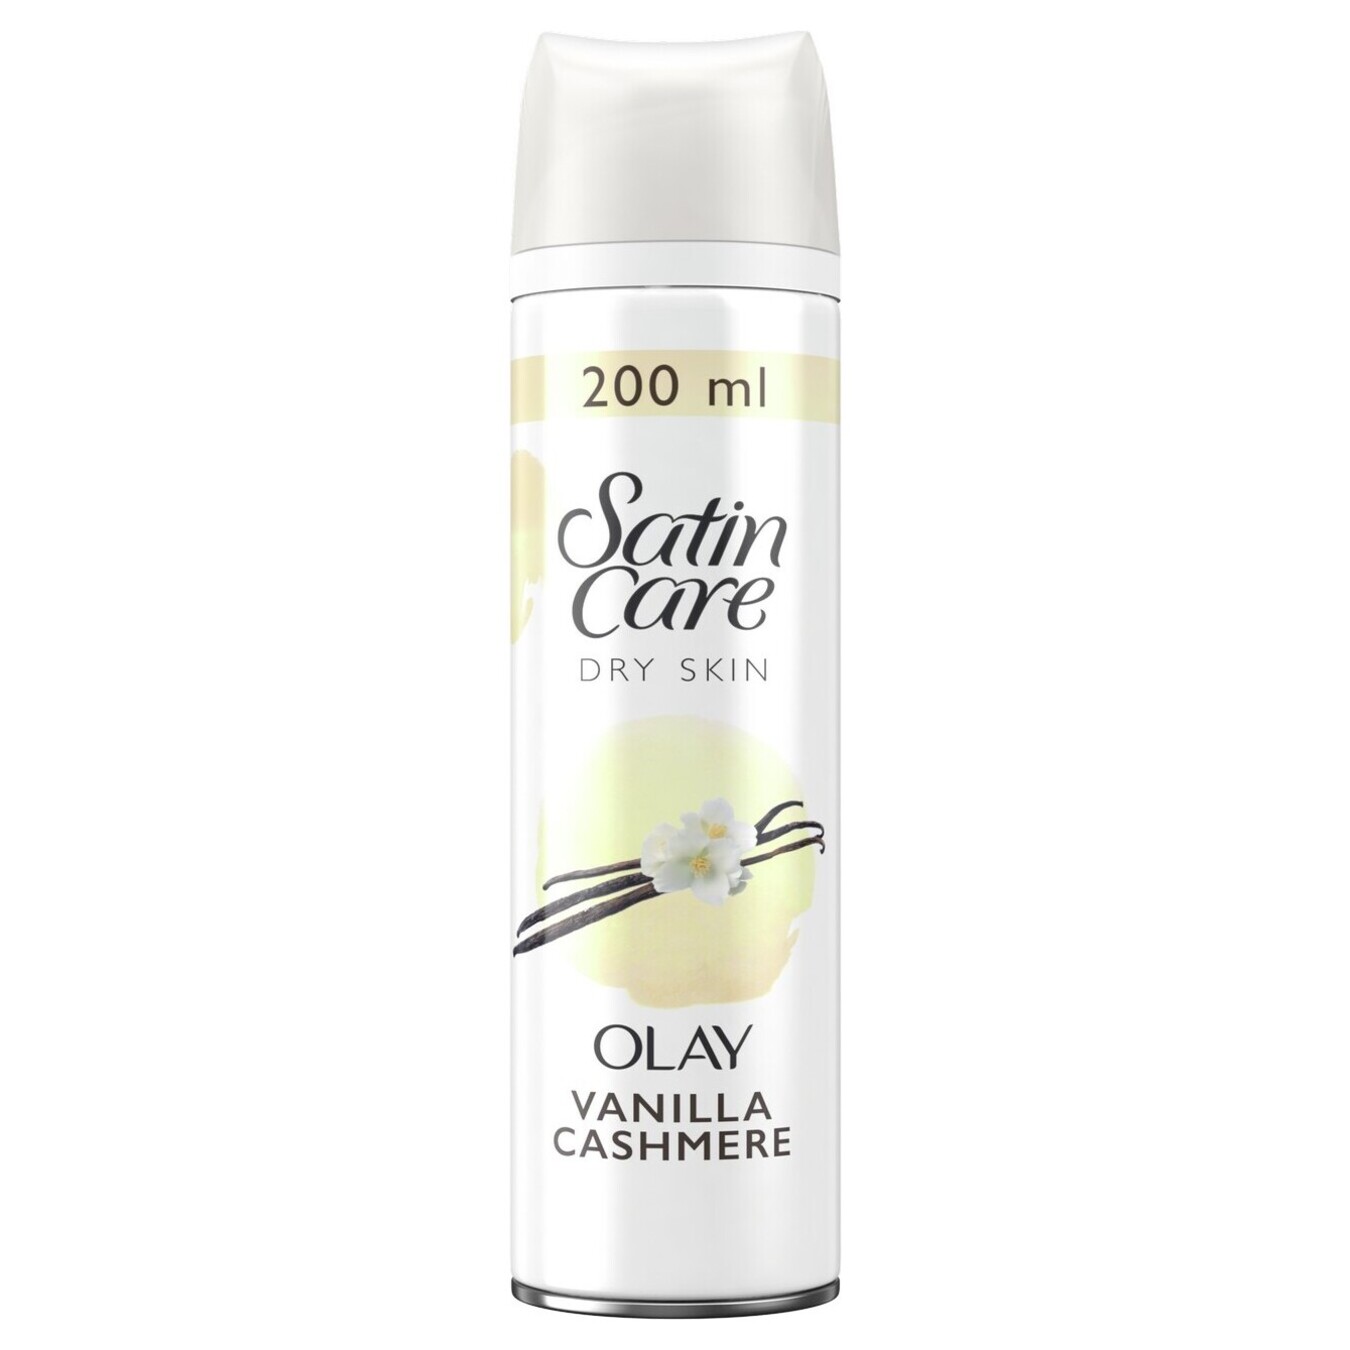 Gillette Satin Care Olay Vanilla Dream shaving gel 200ml